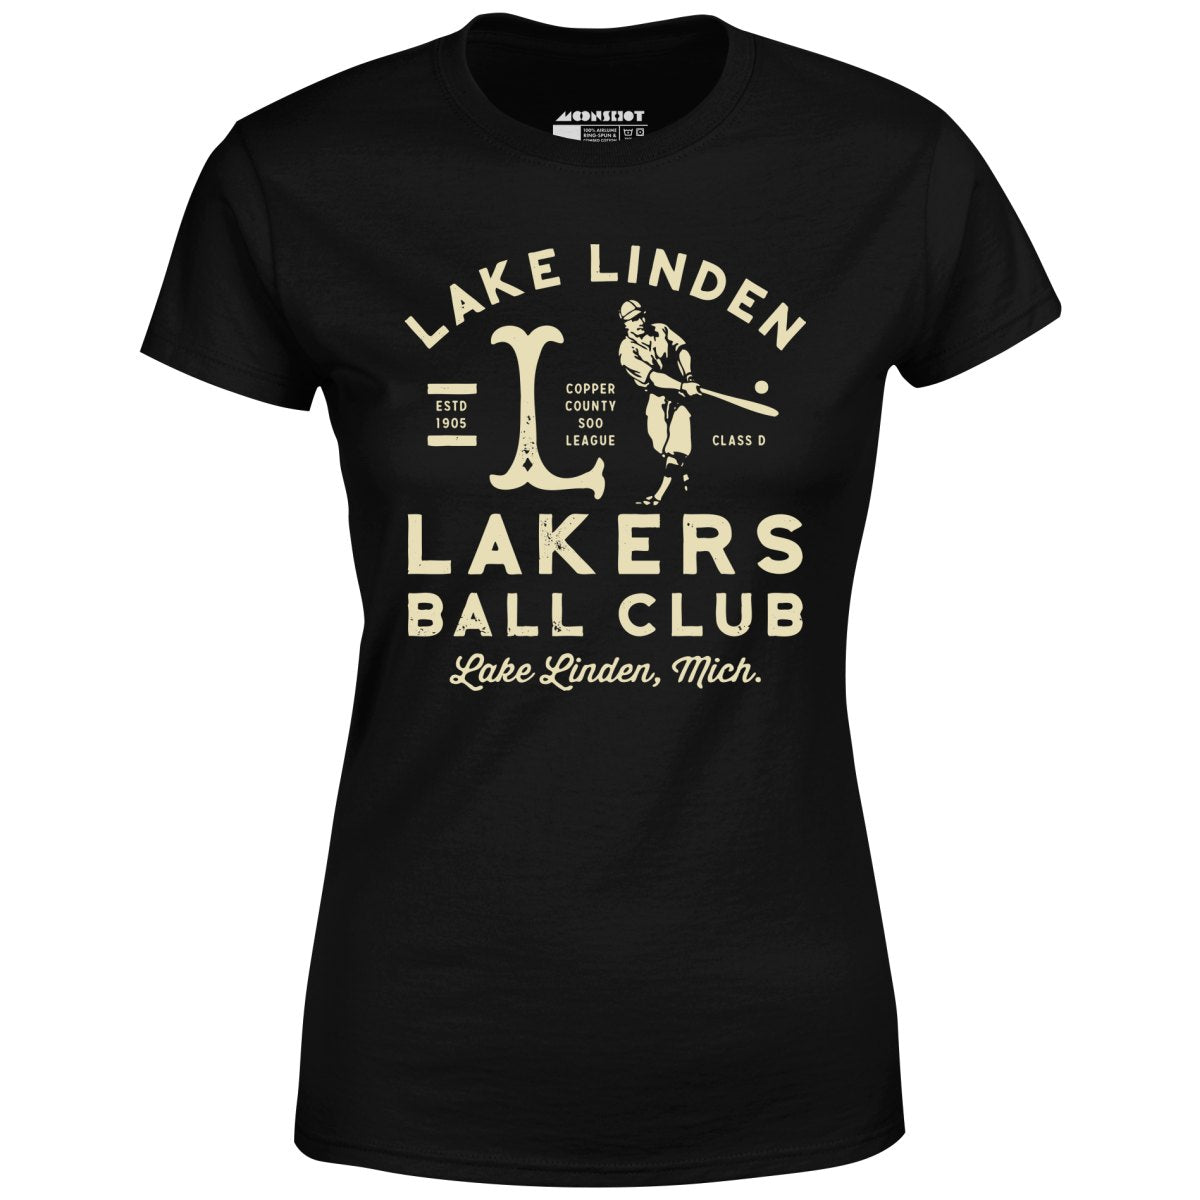 Lake Linden Lakers - Michigan - Vintage Defunct Baseball Teams - Women's T-Shirt